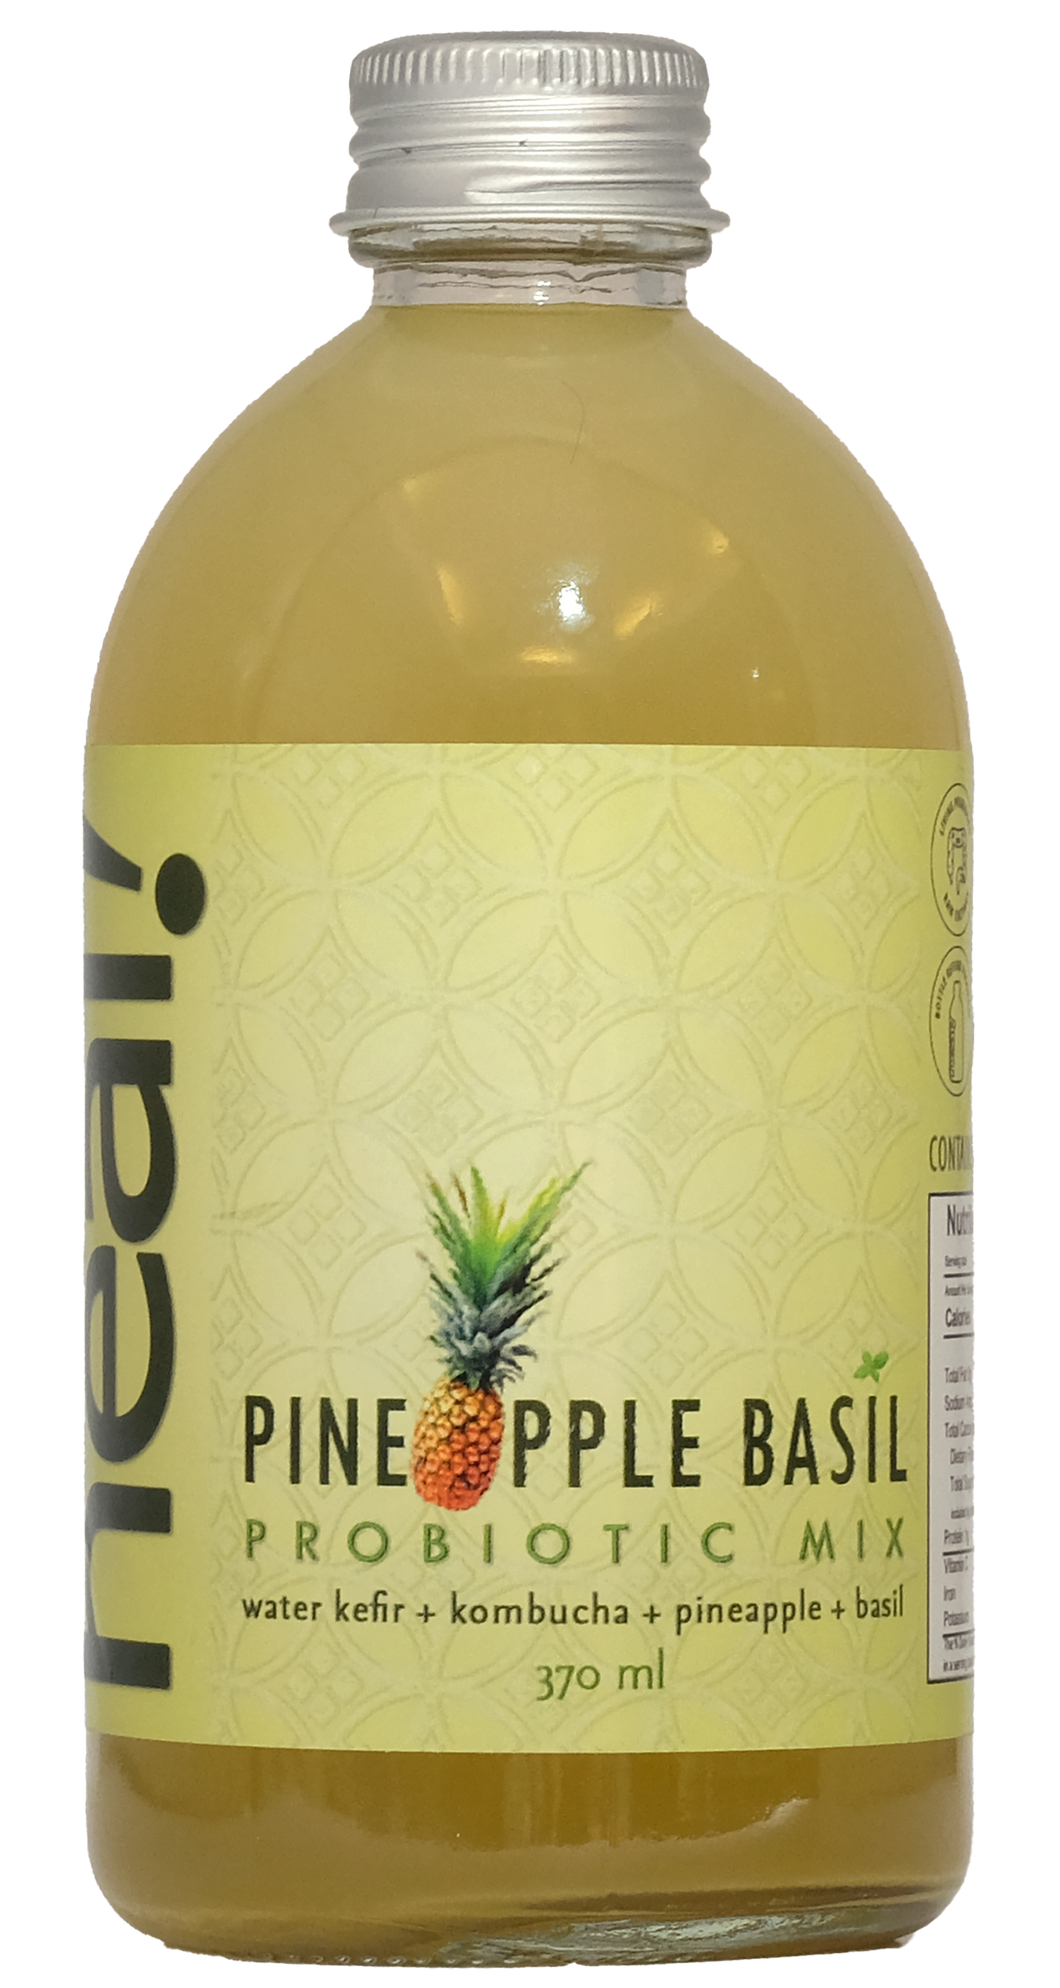 Pineapple Basil Probiotic Mix